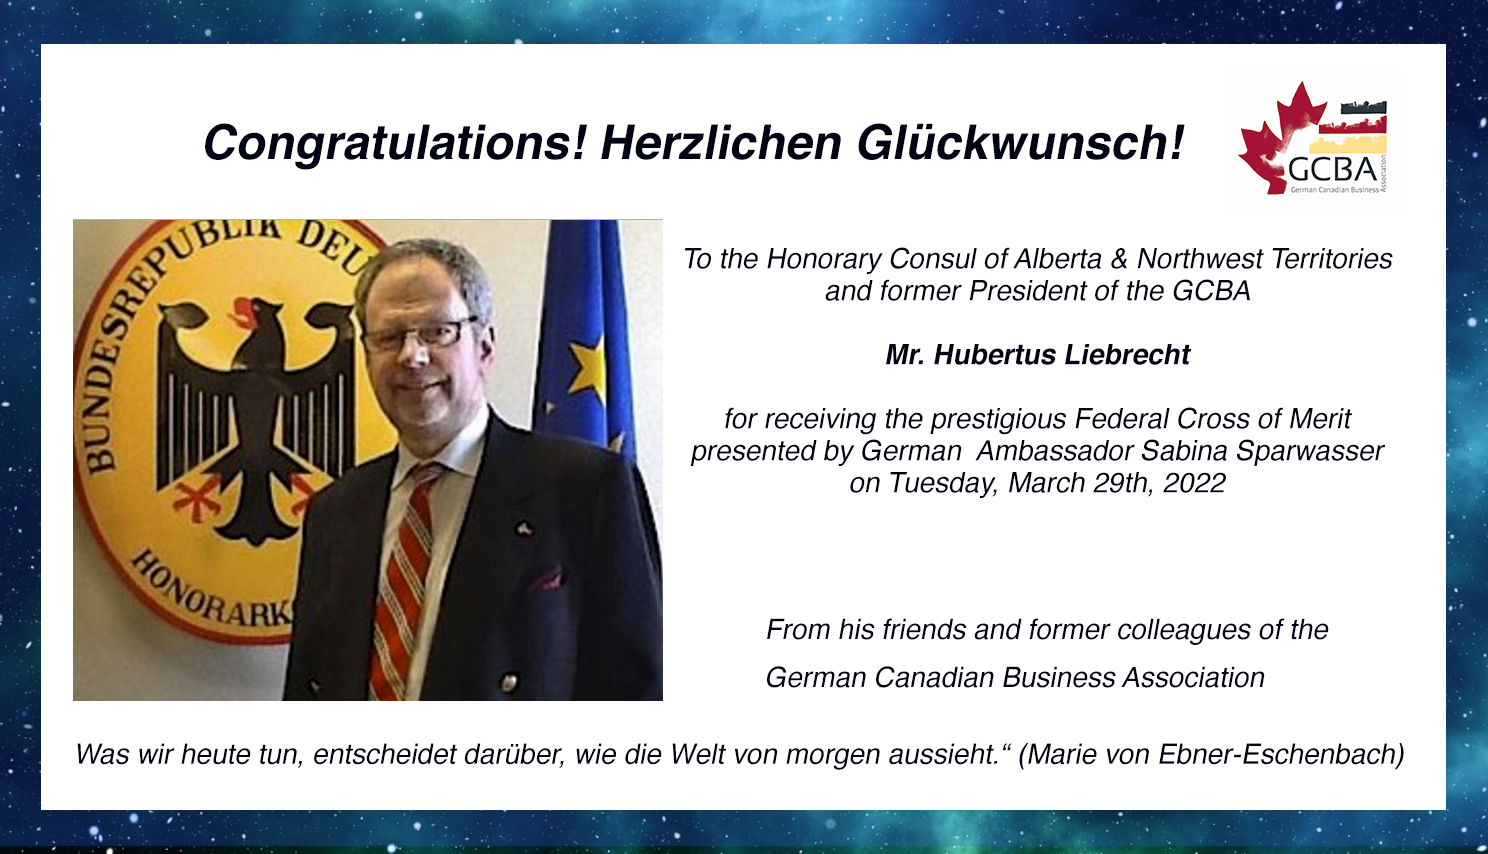 Honorary Consul Hubertus Liebrecht Receives an award